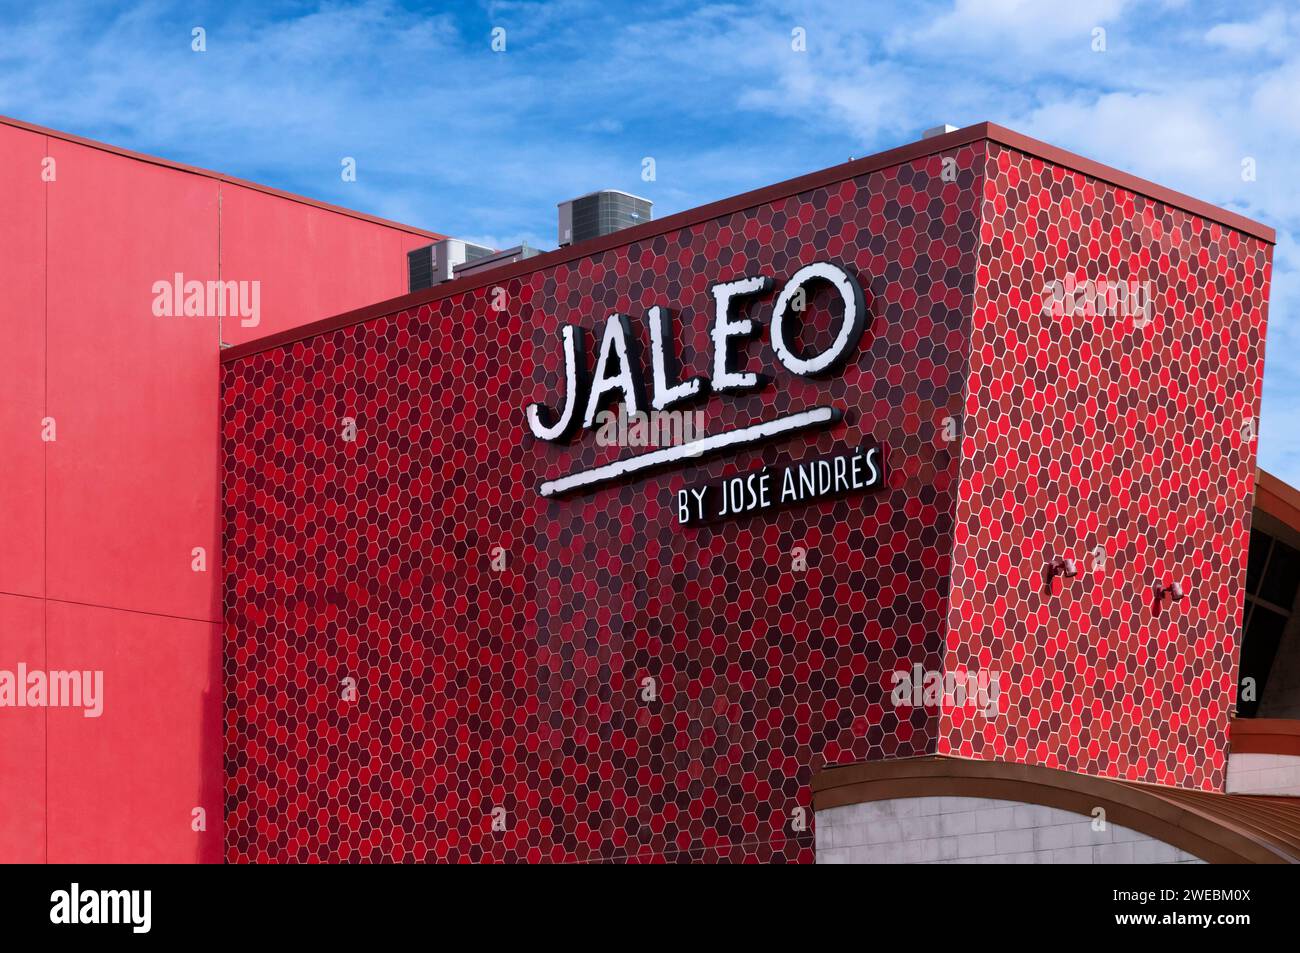 Jaleo by Jose Andres spanish restaurant at Disney Springs. Stock Photo